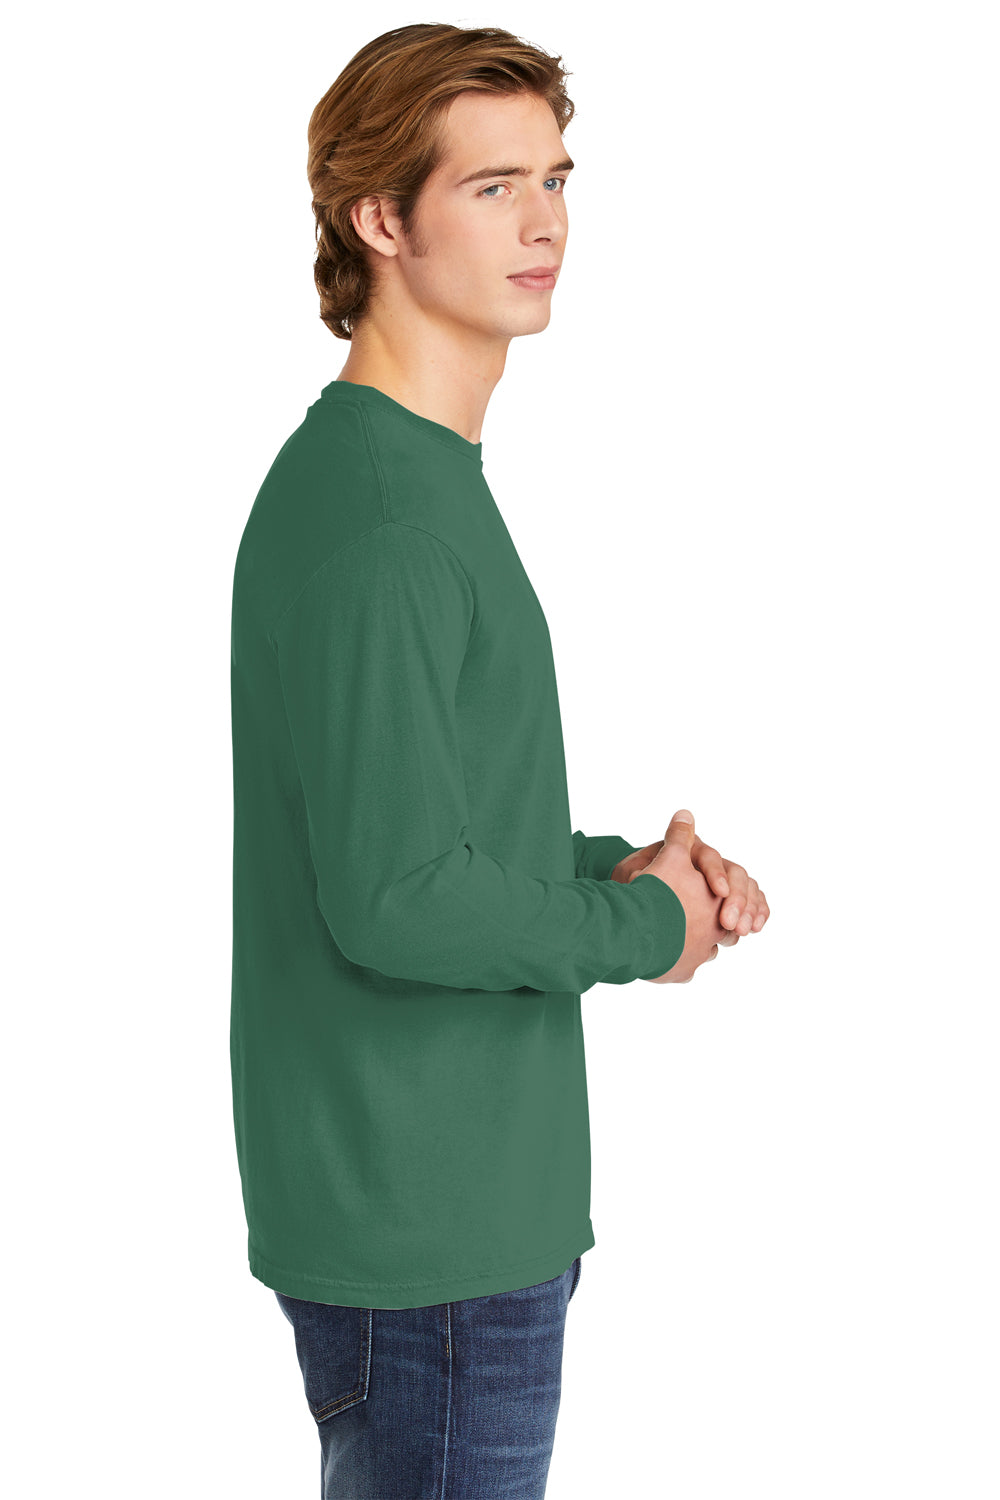 Comfort Colors Mens Long Sleeve Crewneck T-Shirt Grass Green Side